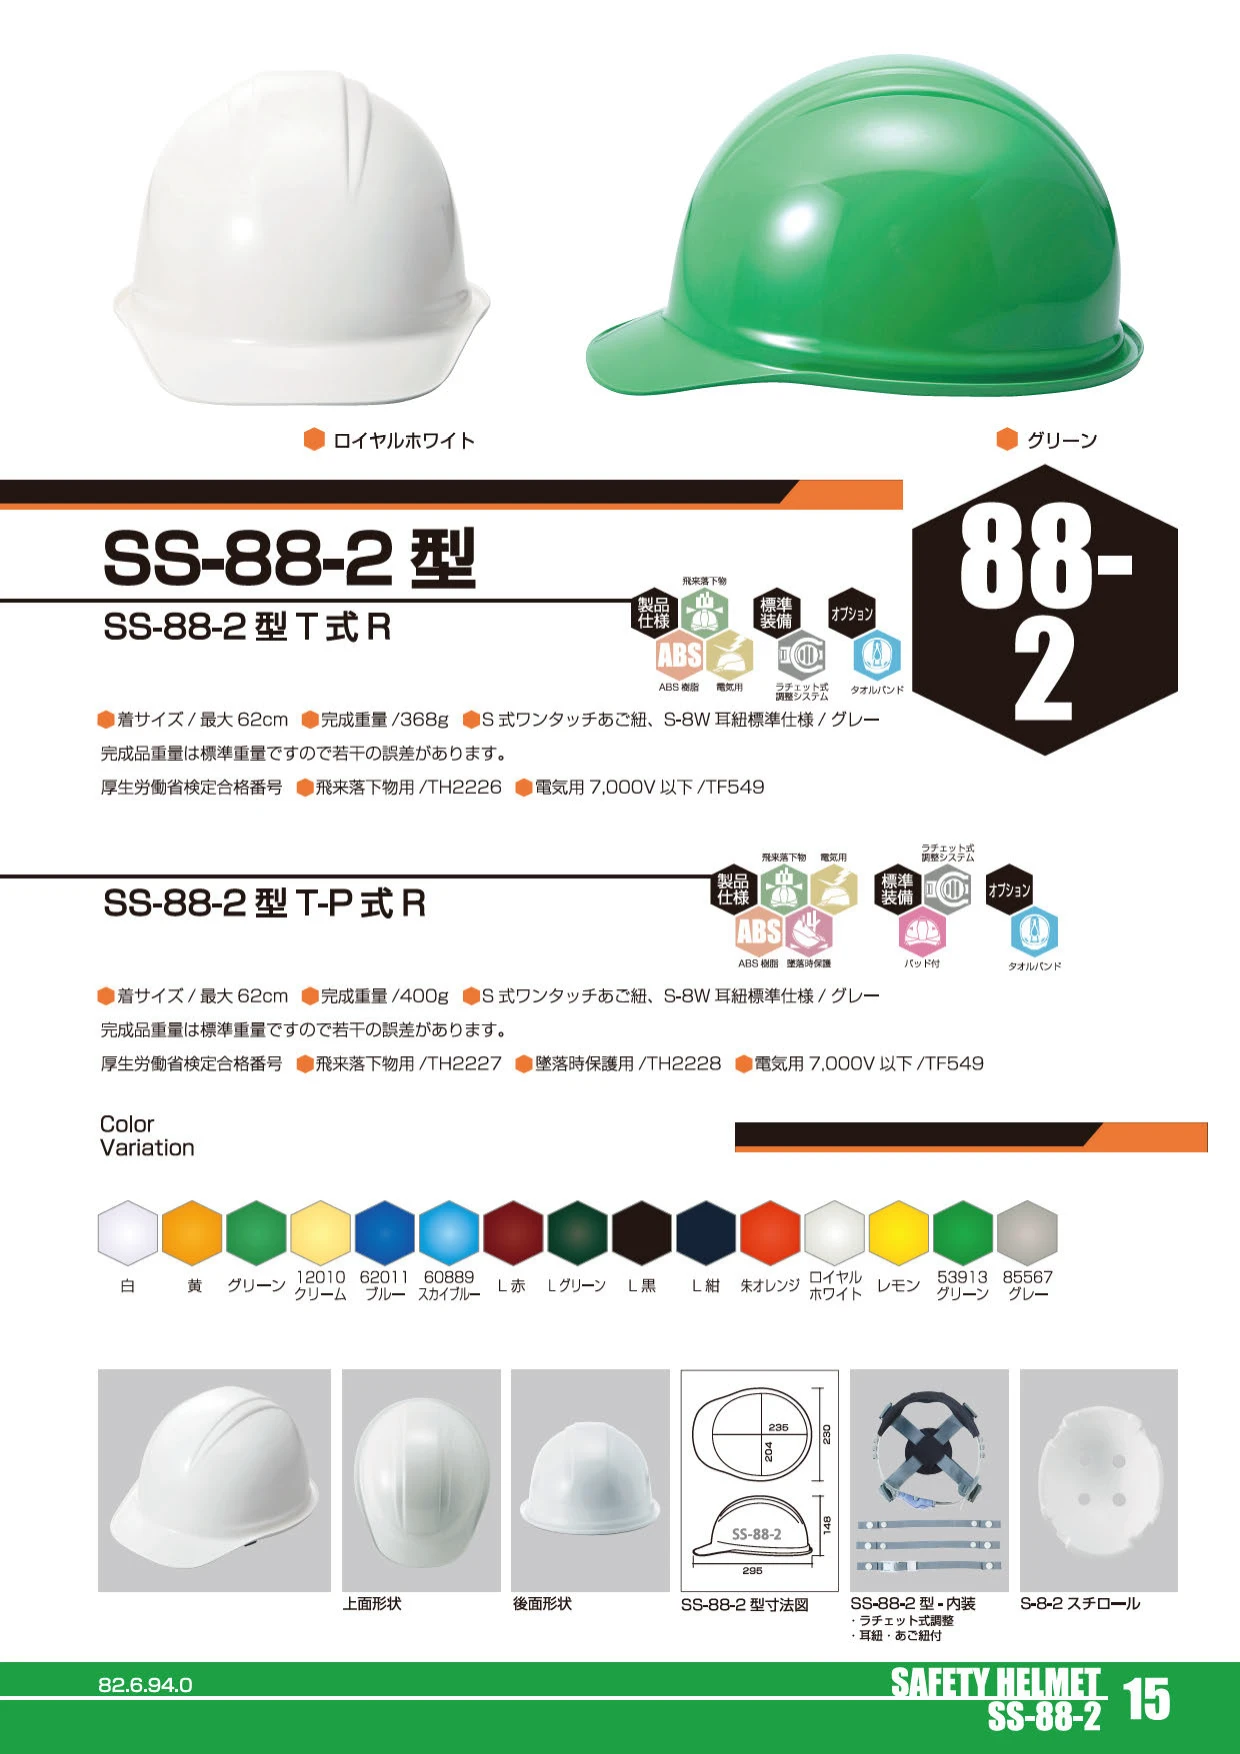 shinwa-helmet-ss-88-2-tpr-catalog